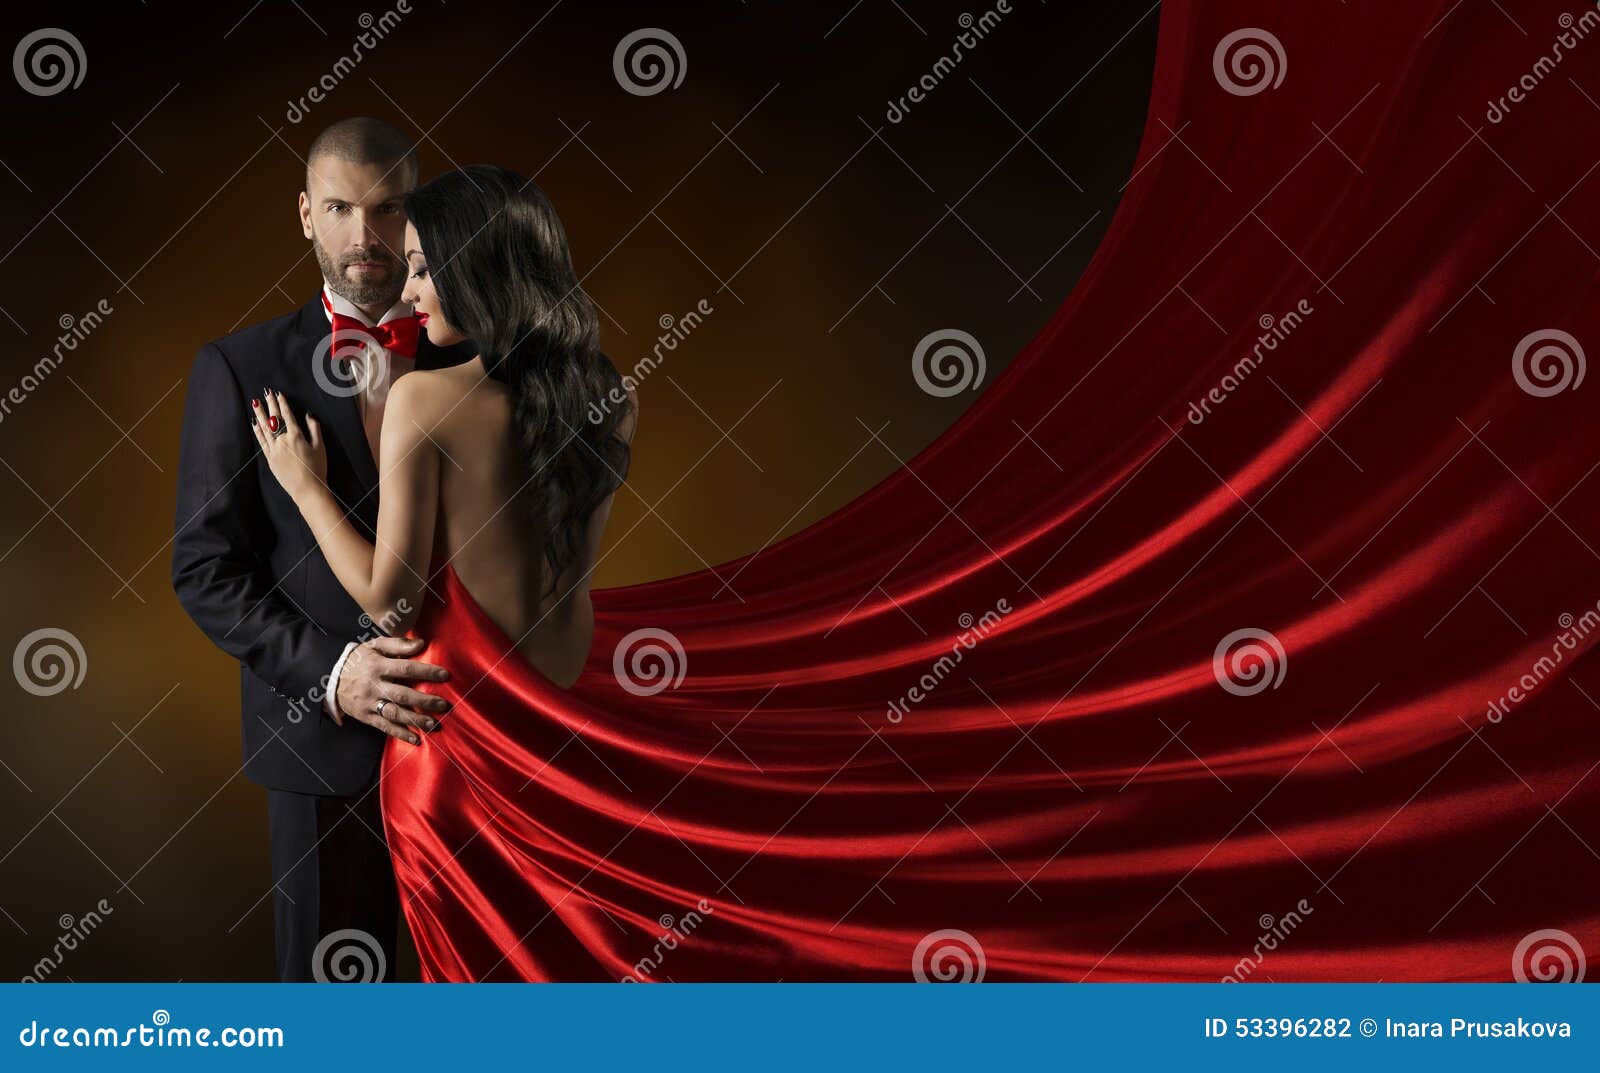 couple beauty portrait, man in suit woman red dress, rich gown